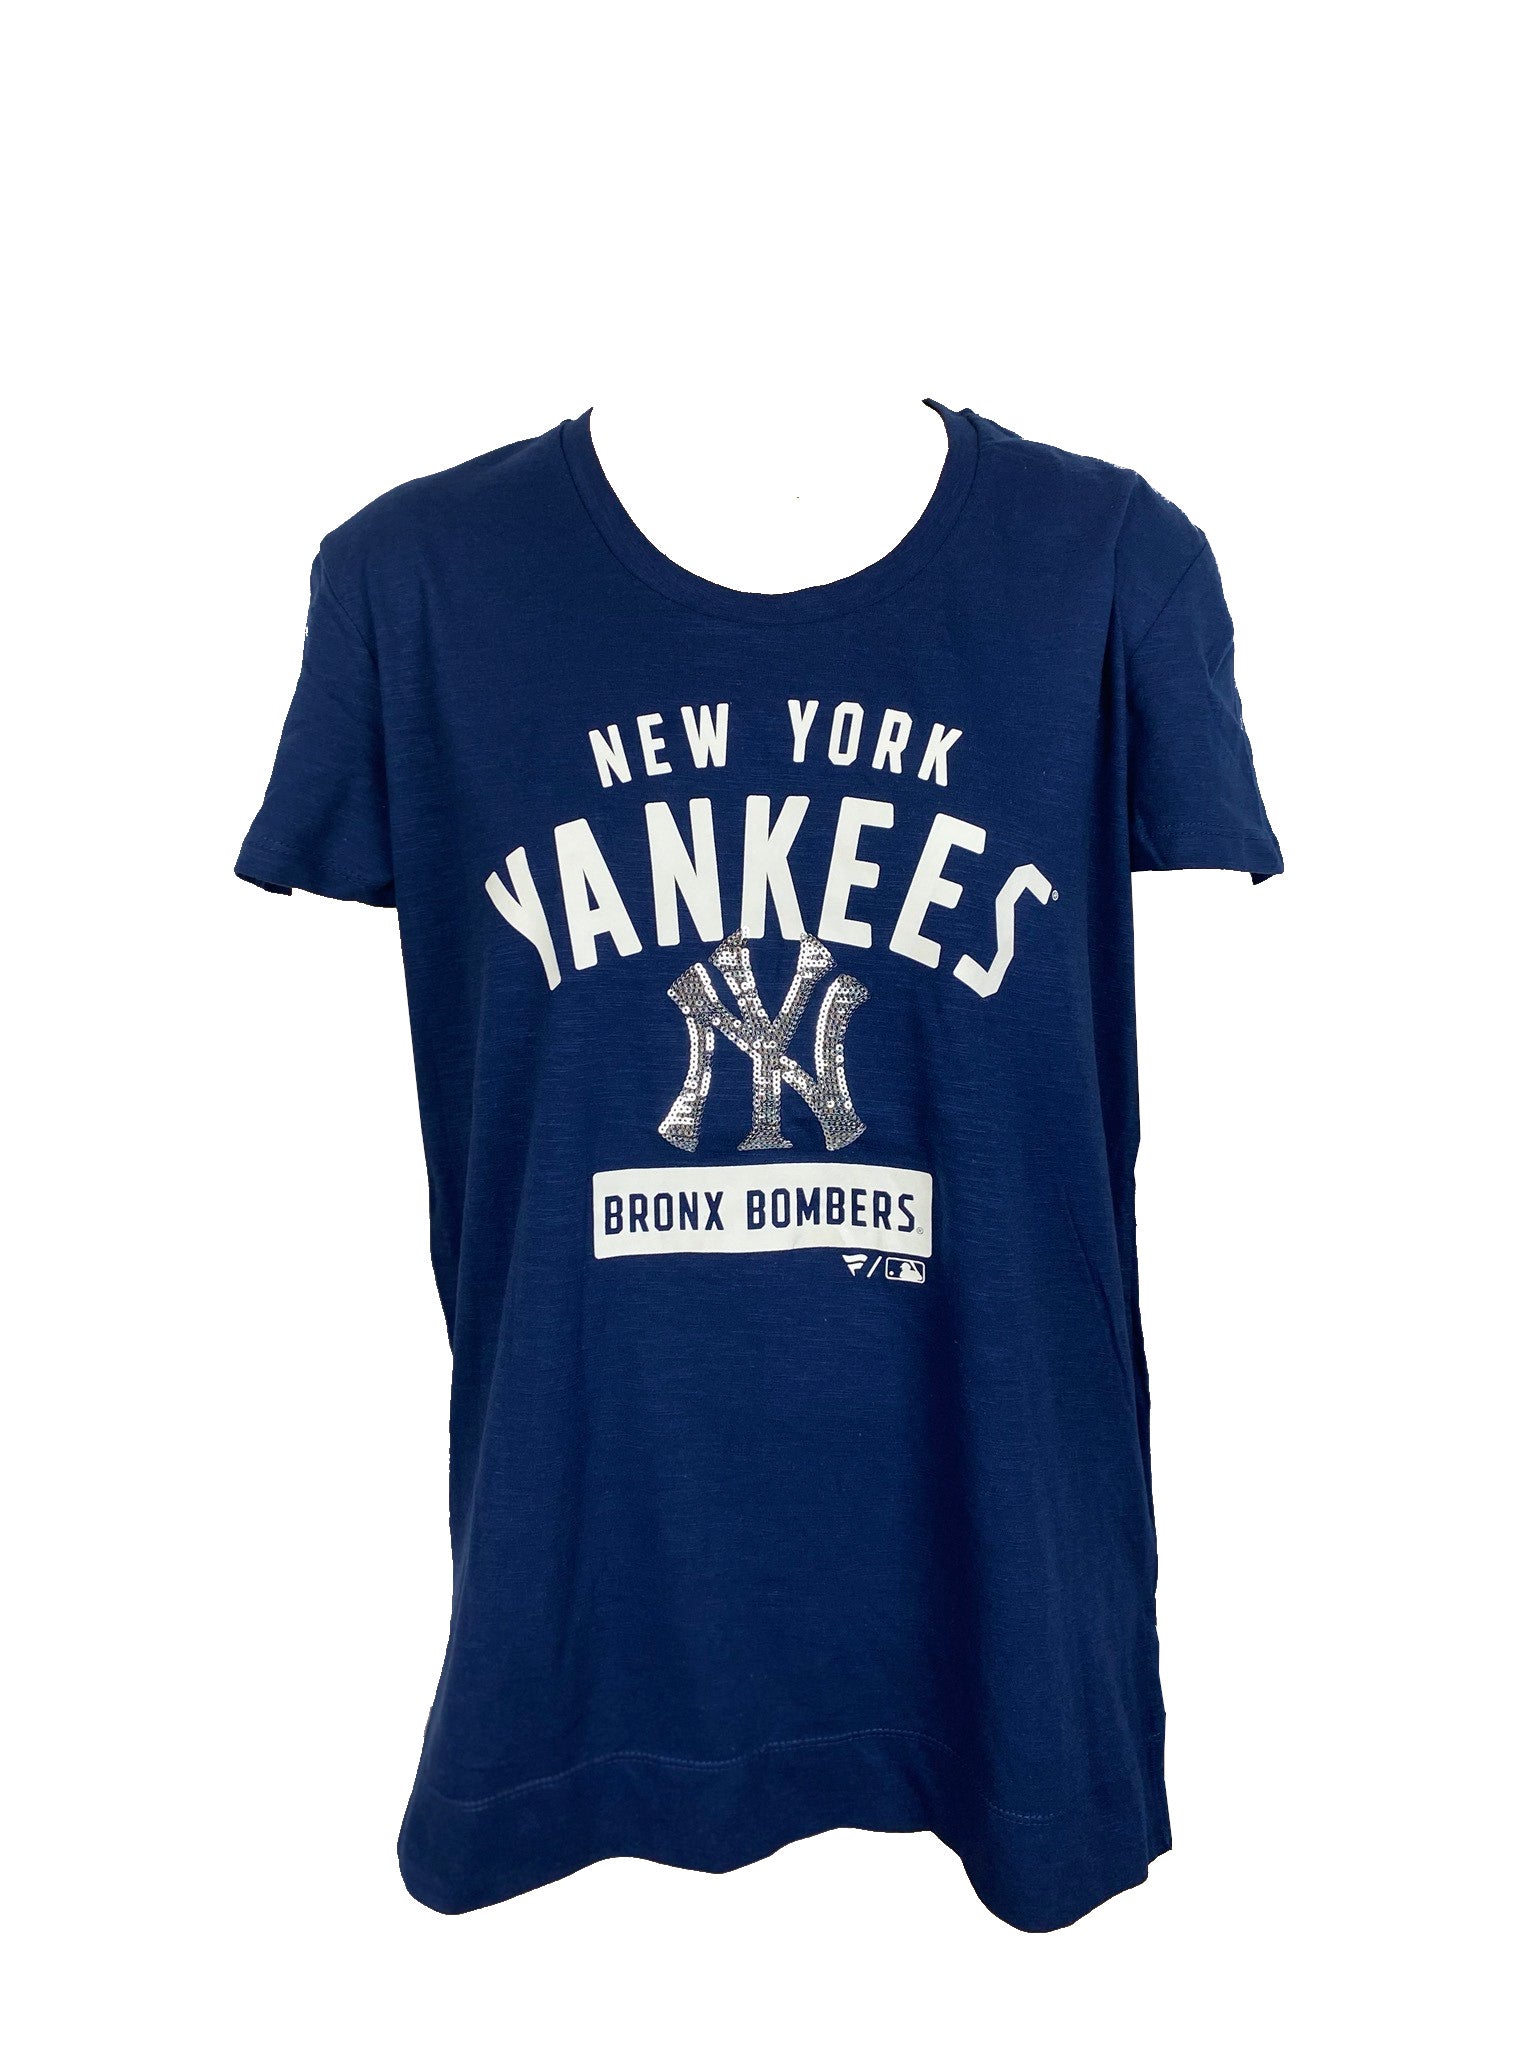 Official Women's New York Yankees Gear, Womens Yankees Apparel, Ladies  Yankees Outfits